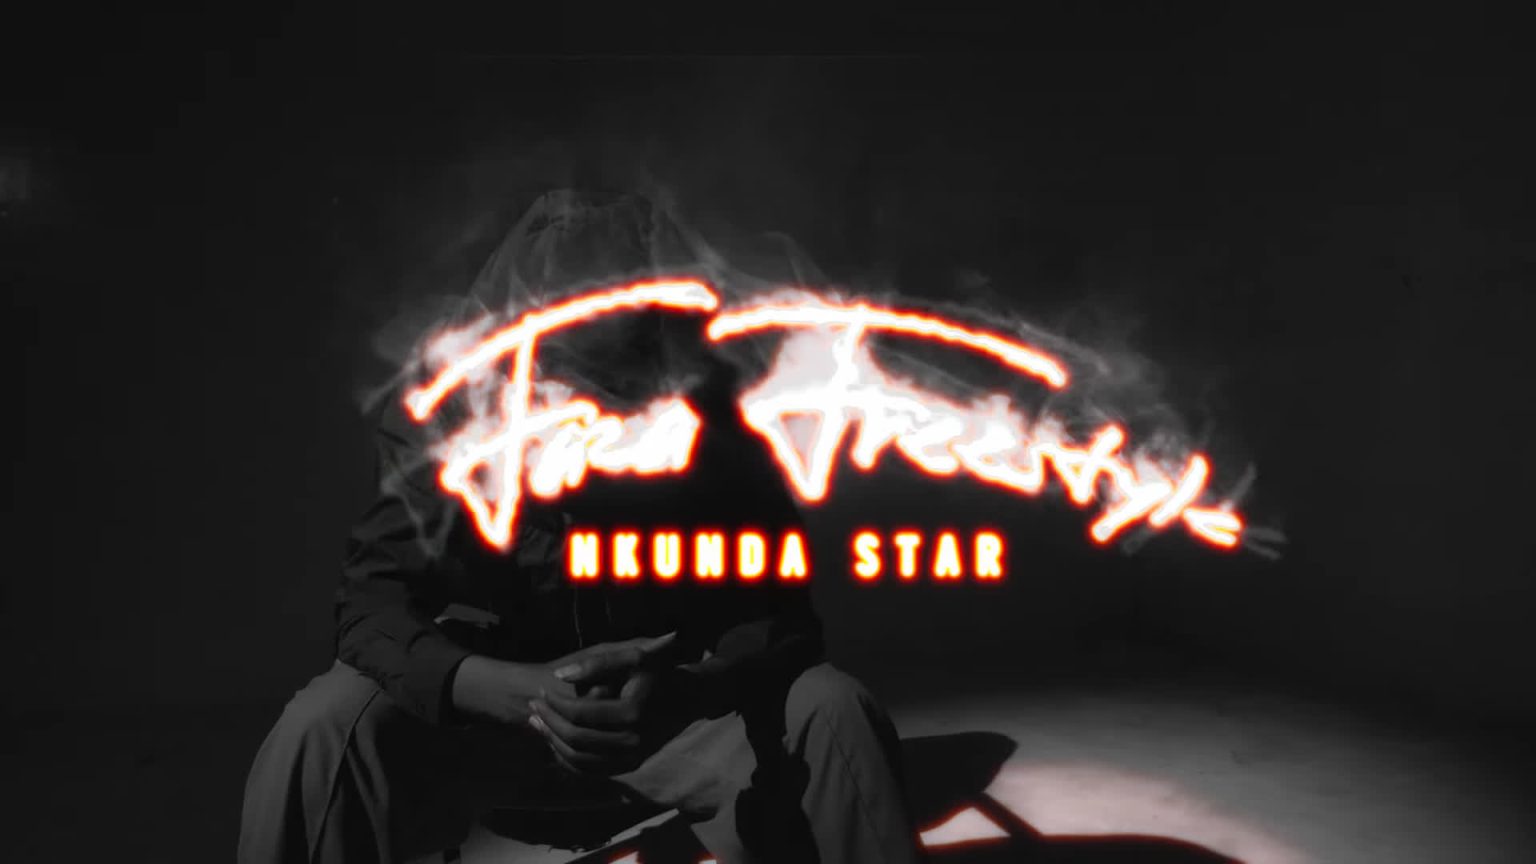 Audio |  Nkunda Star – FaZa Freestyle | Download MP3